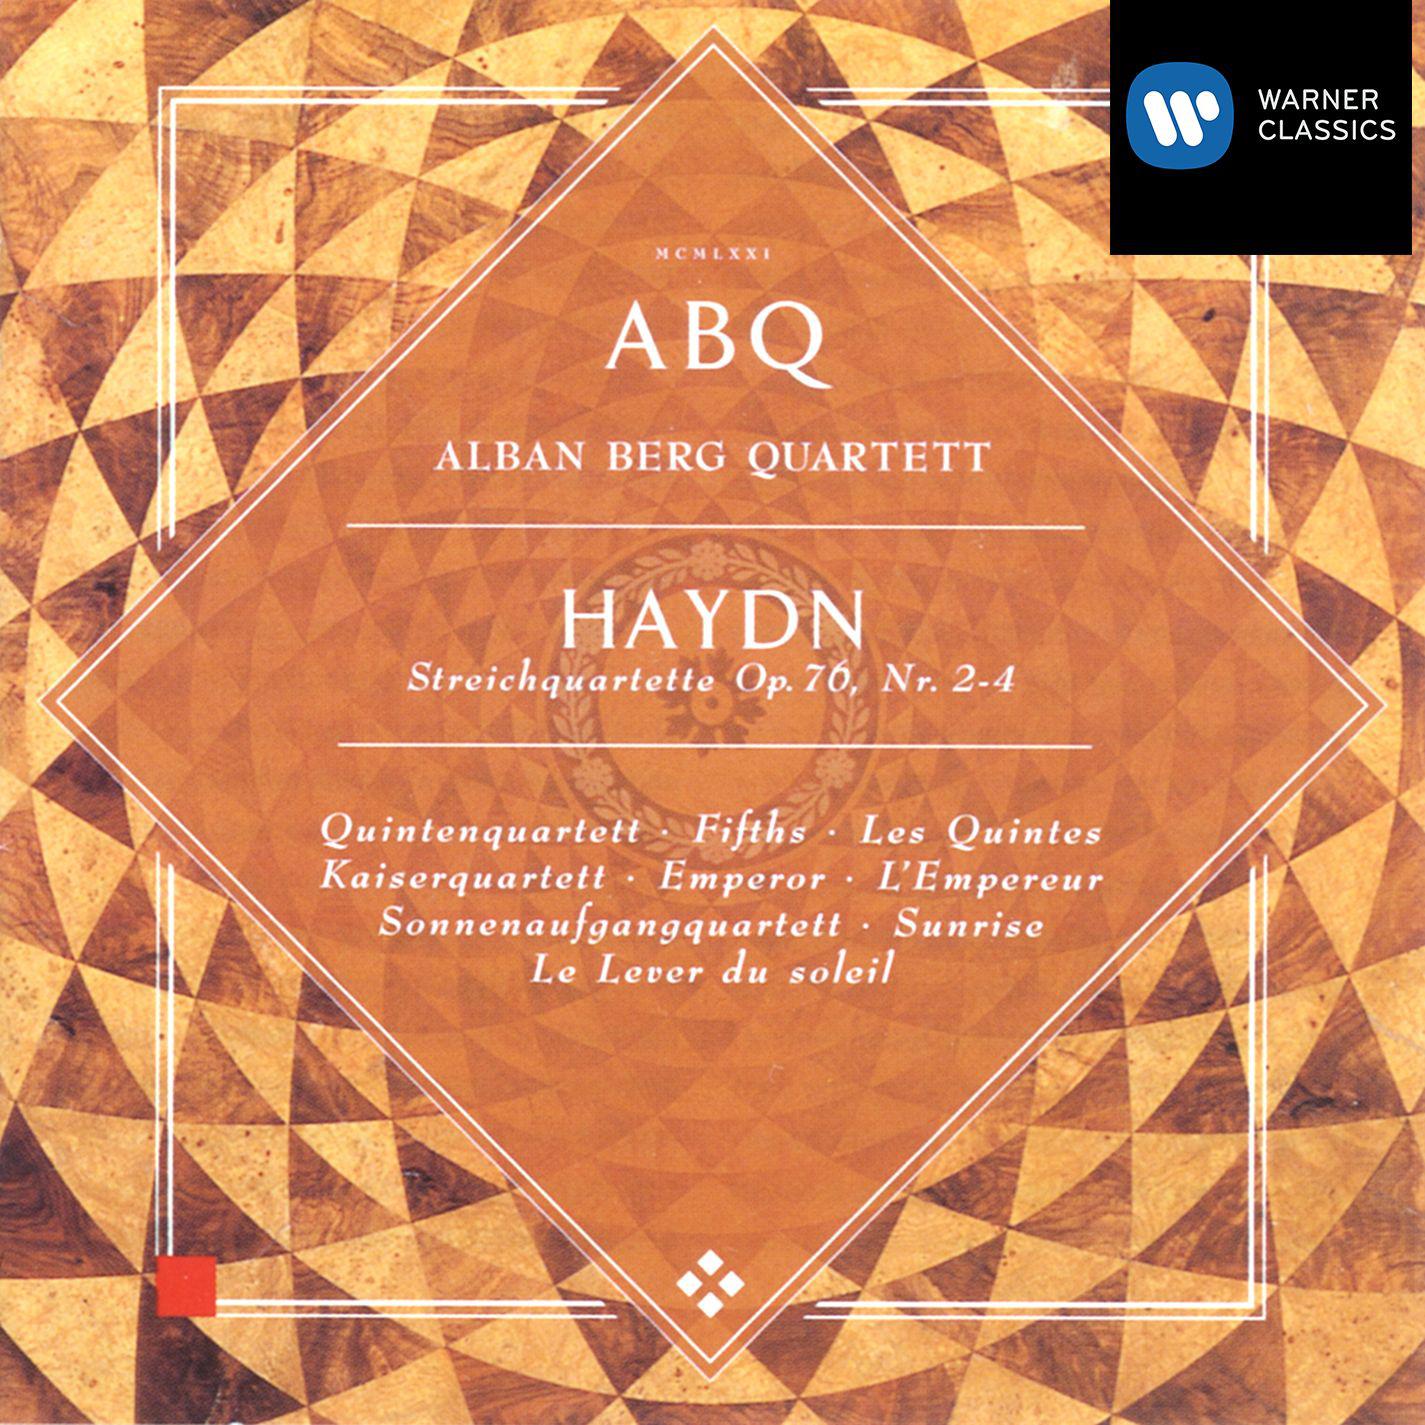 String Quartet in C Major, Op. 76 No. 3, Hob. III:77 "Emperor": I. Allegro